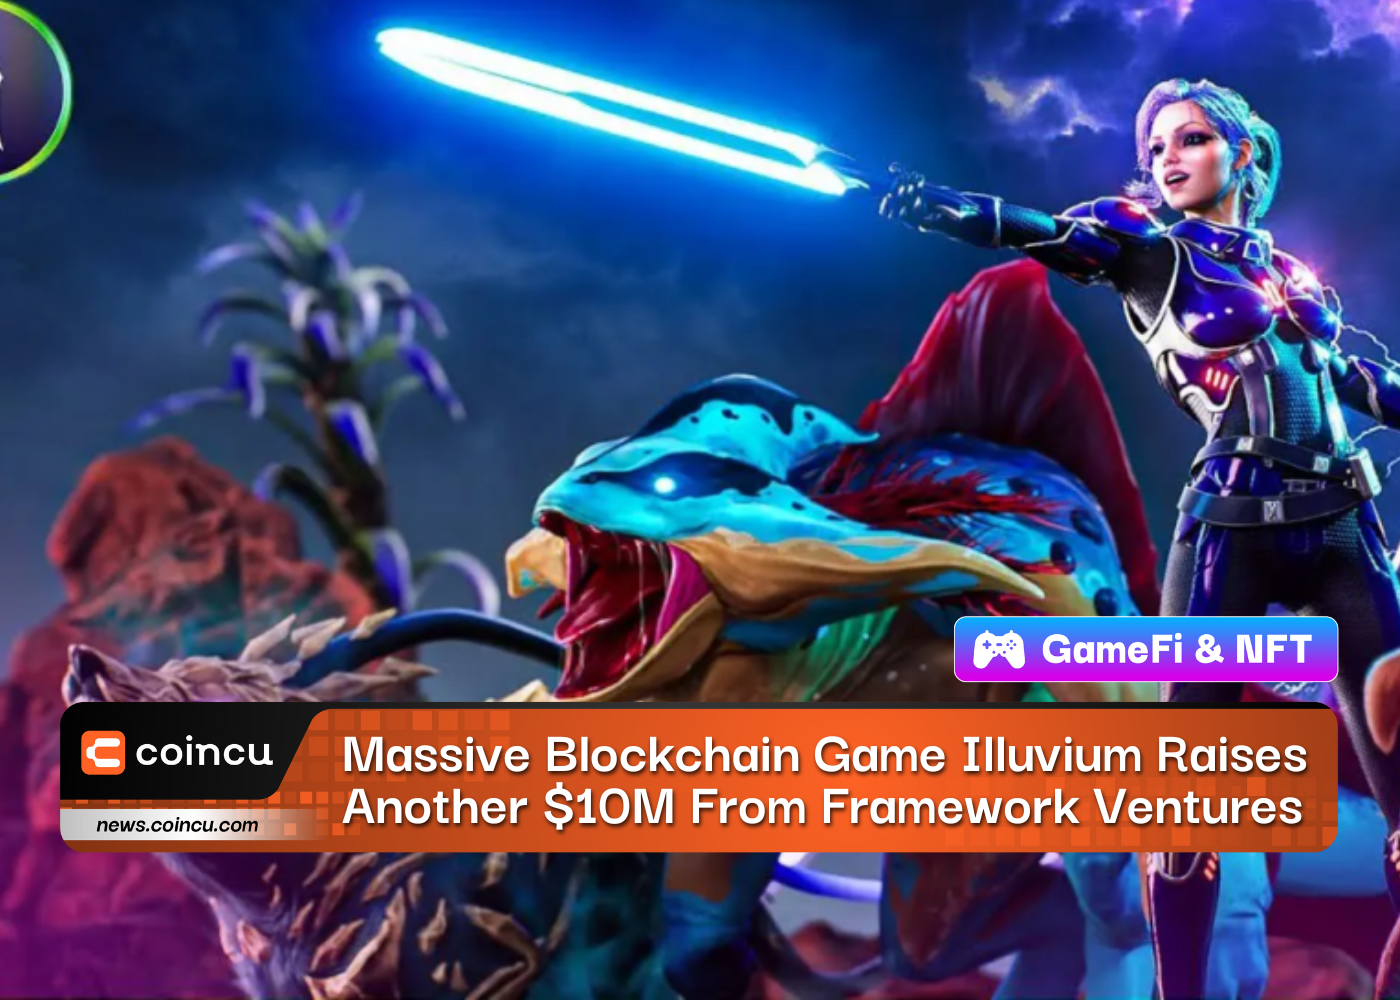 El juego de cadena de bloques masivo Illuvium recauda otros $ 10 millones de Framework Ventures